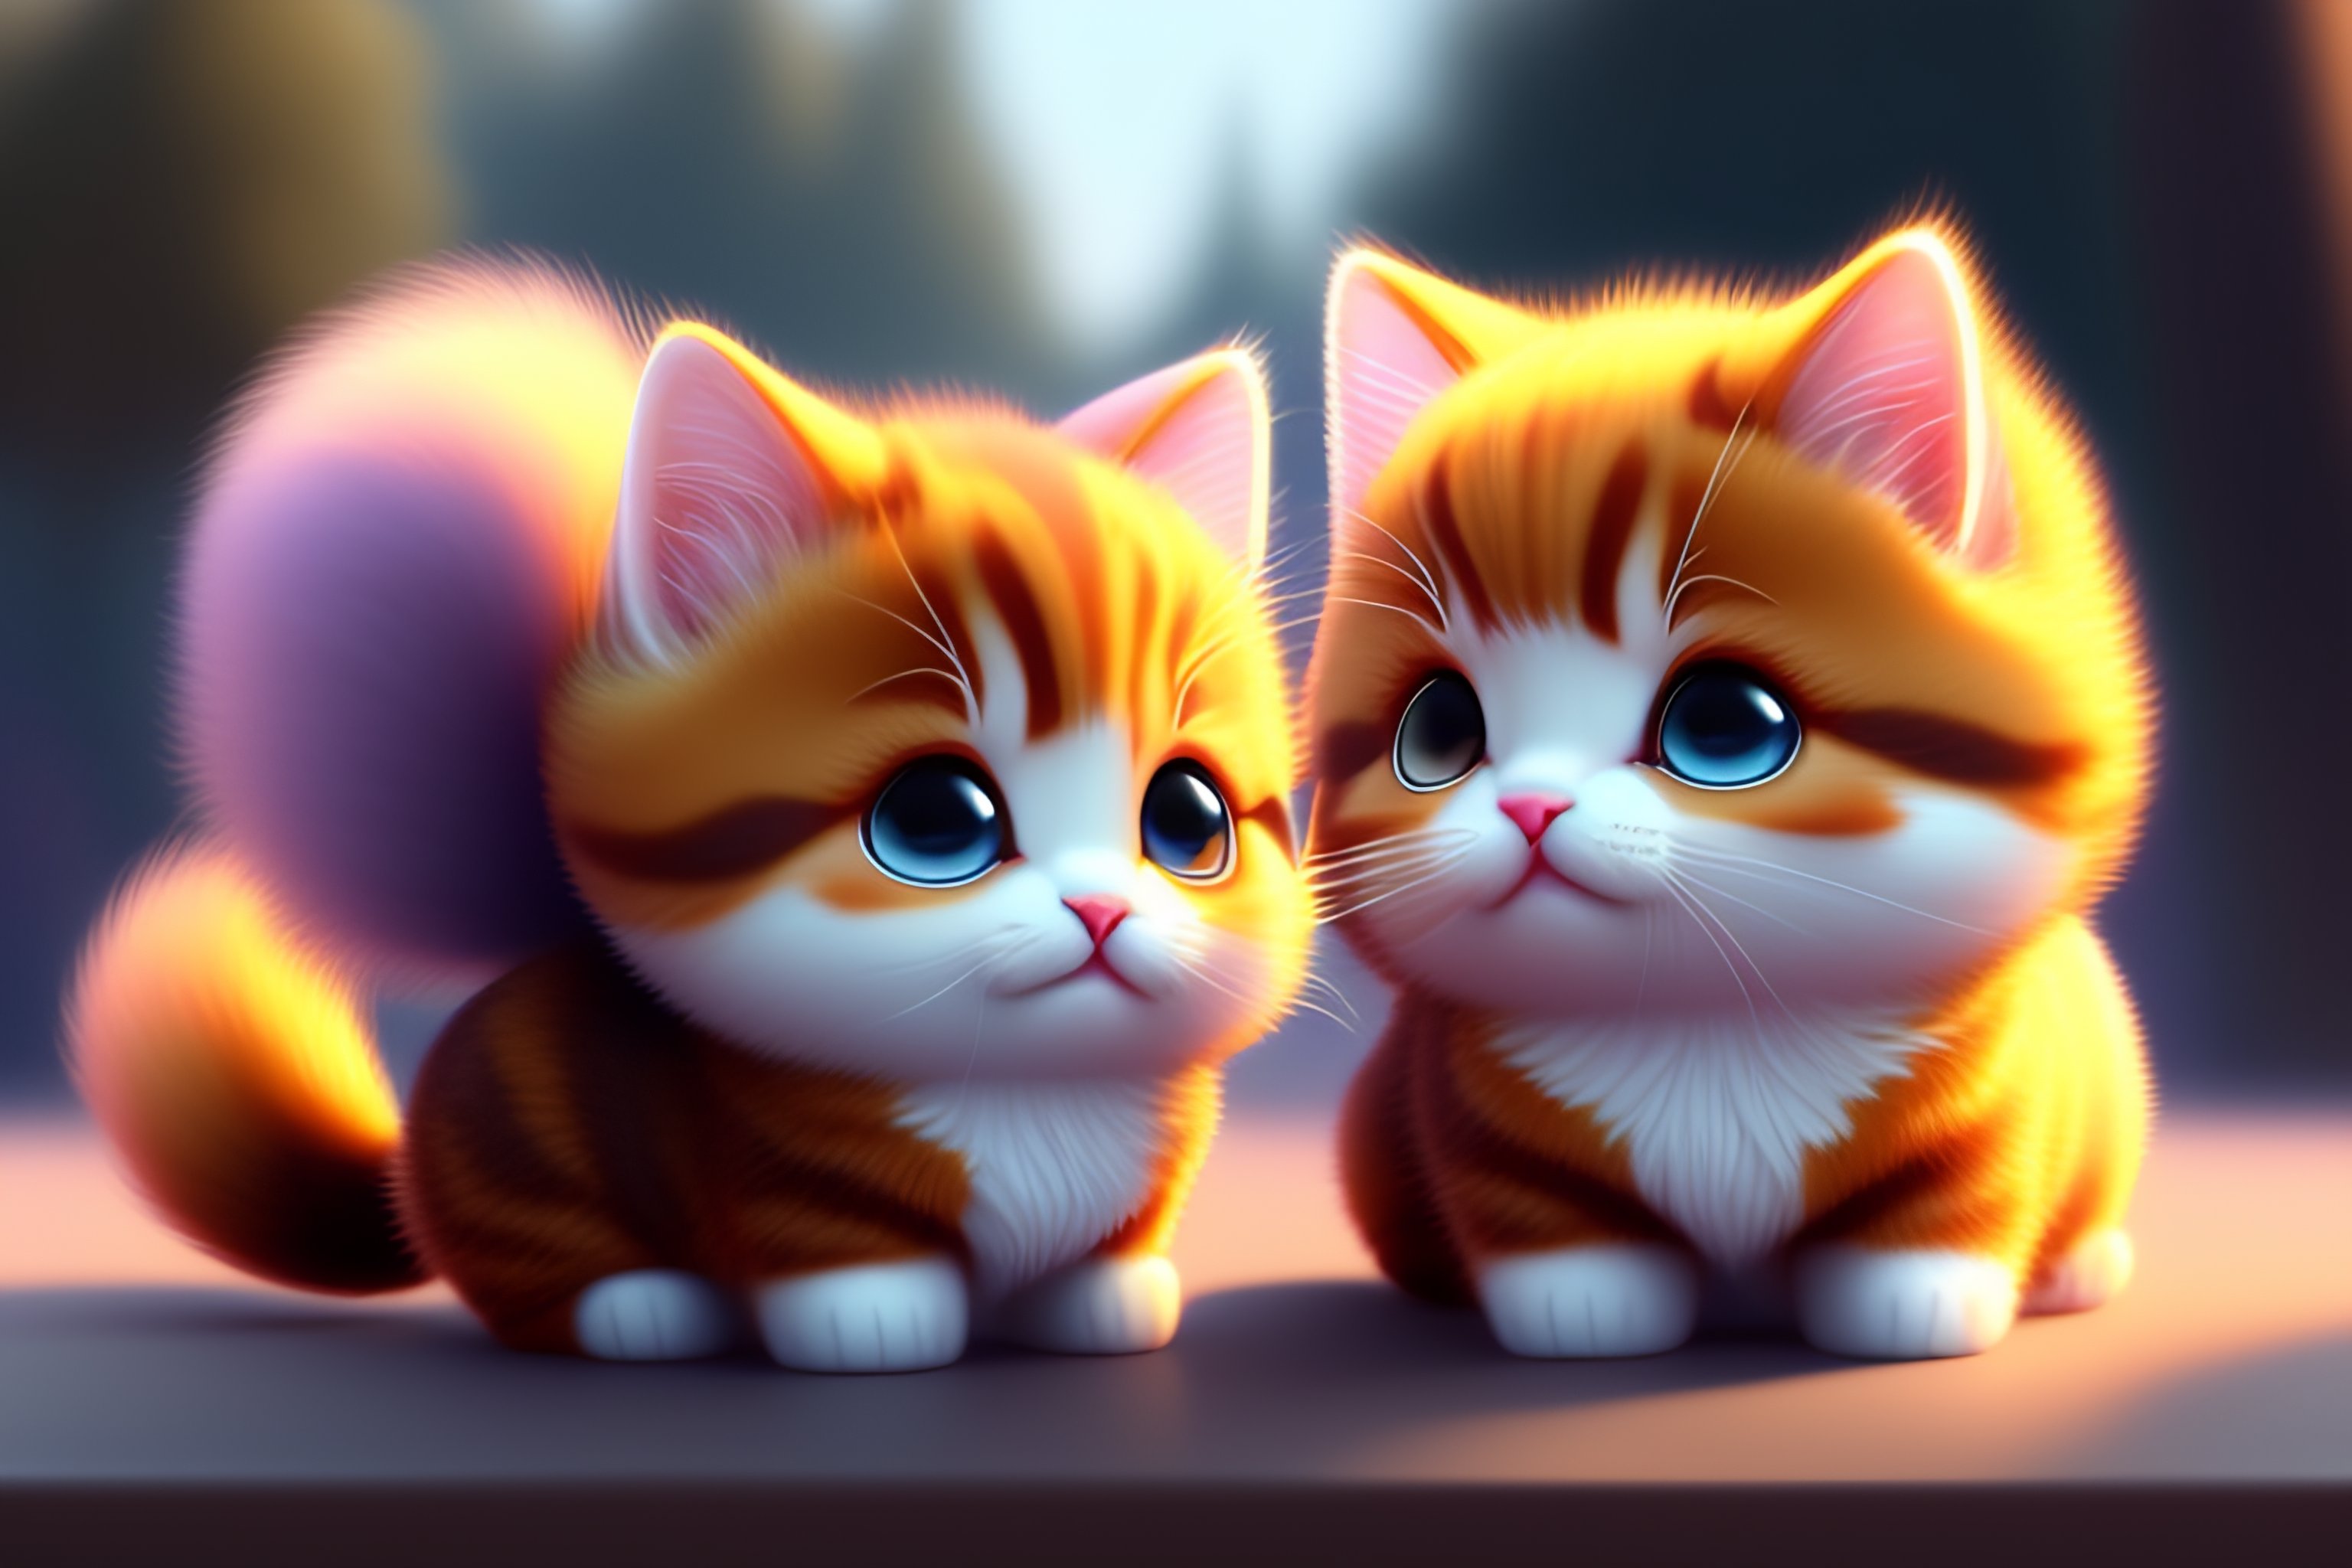 Lexica Cute And Adorable Cartoon Fluffy Baby Cat Fantasy Dreamlike